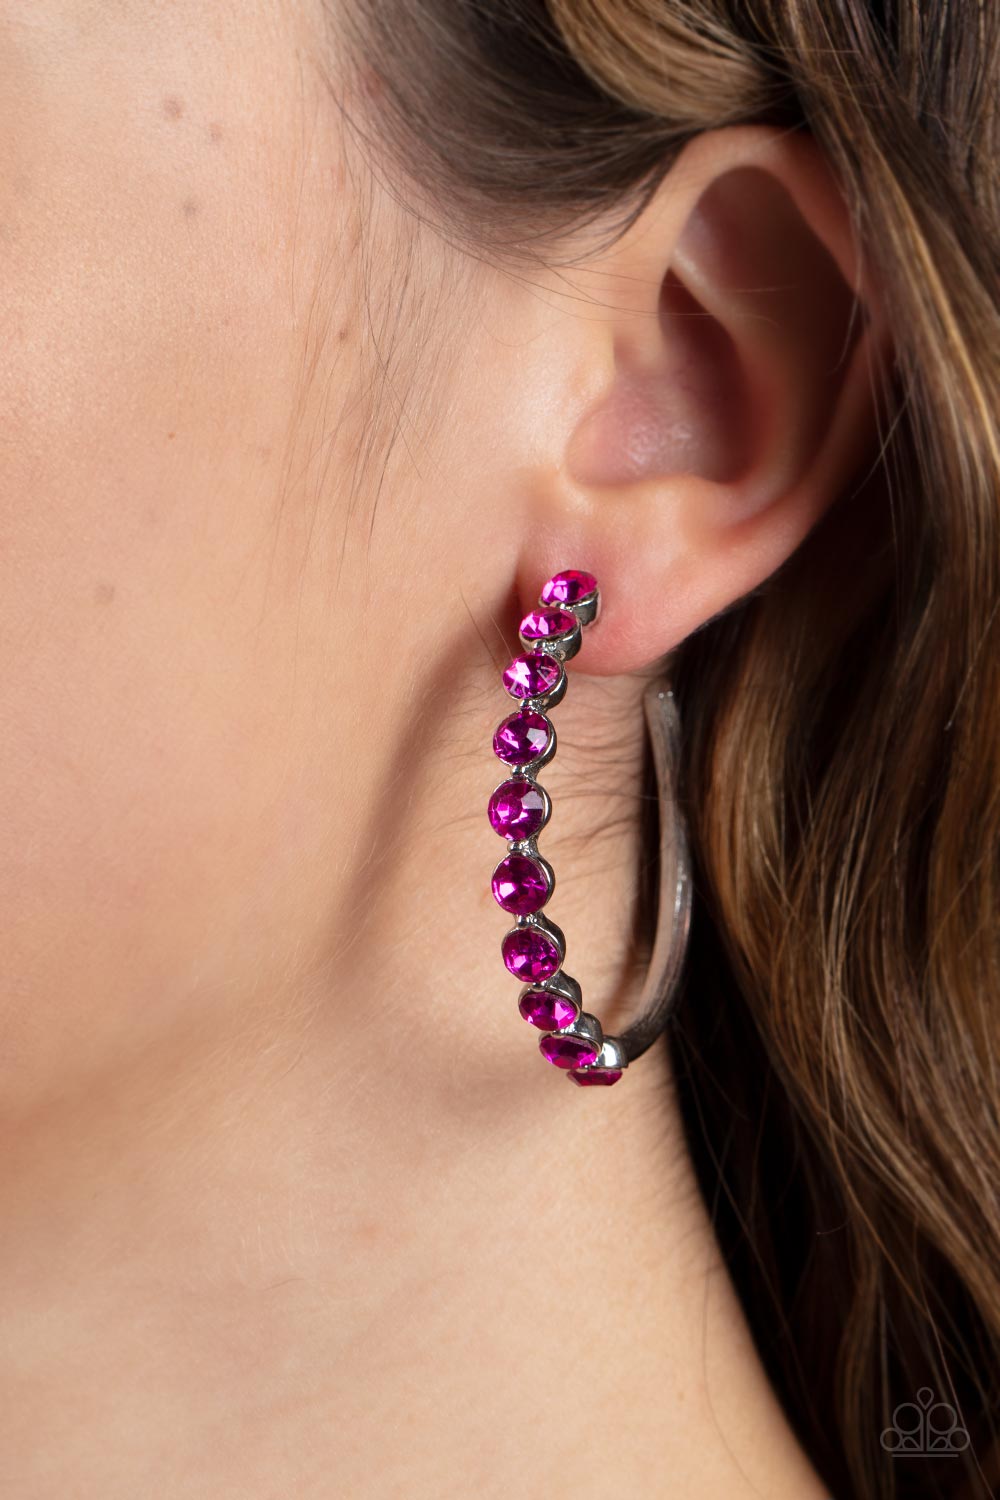 Photo Finish - Pink Hoop Earrings - Princess Glam Shop